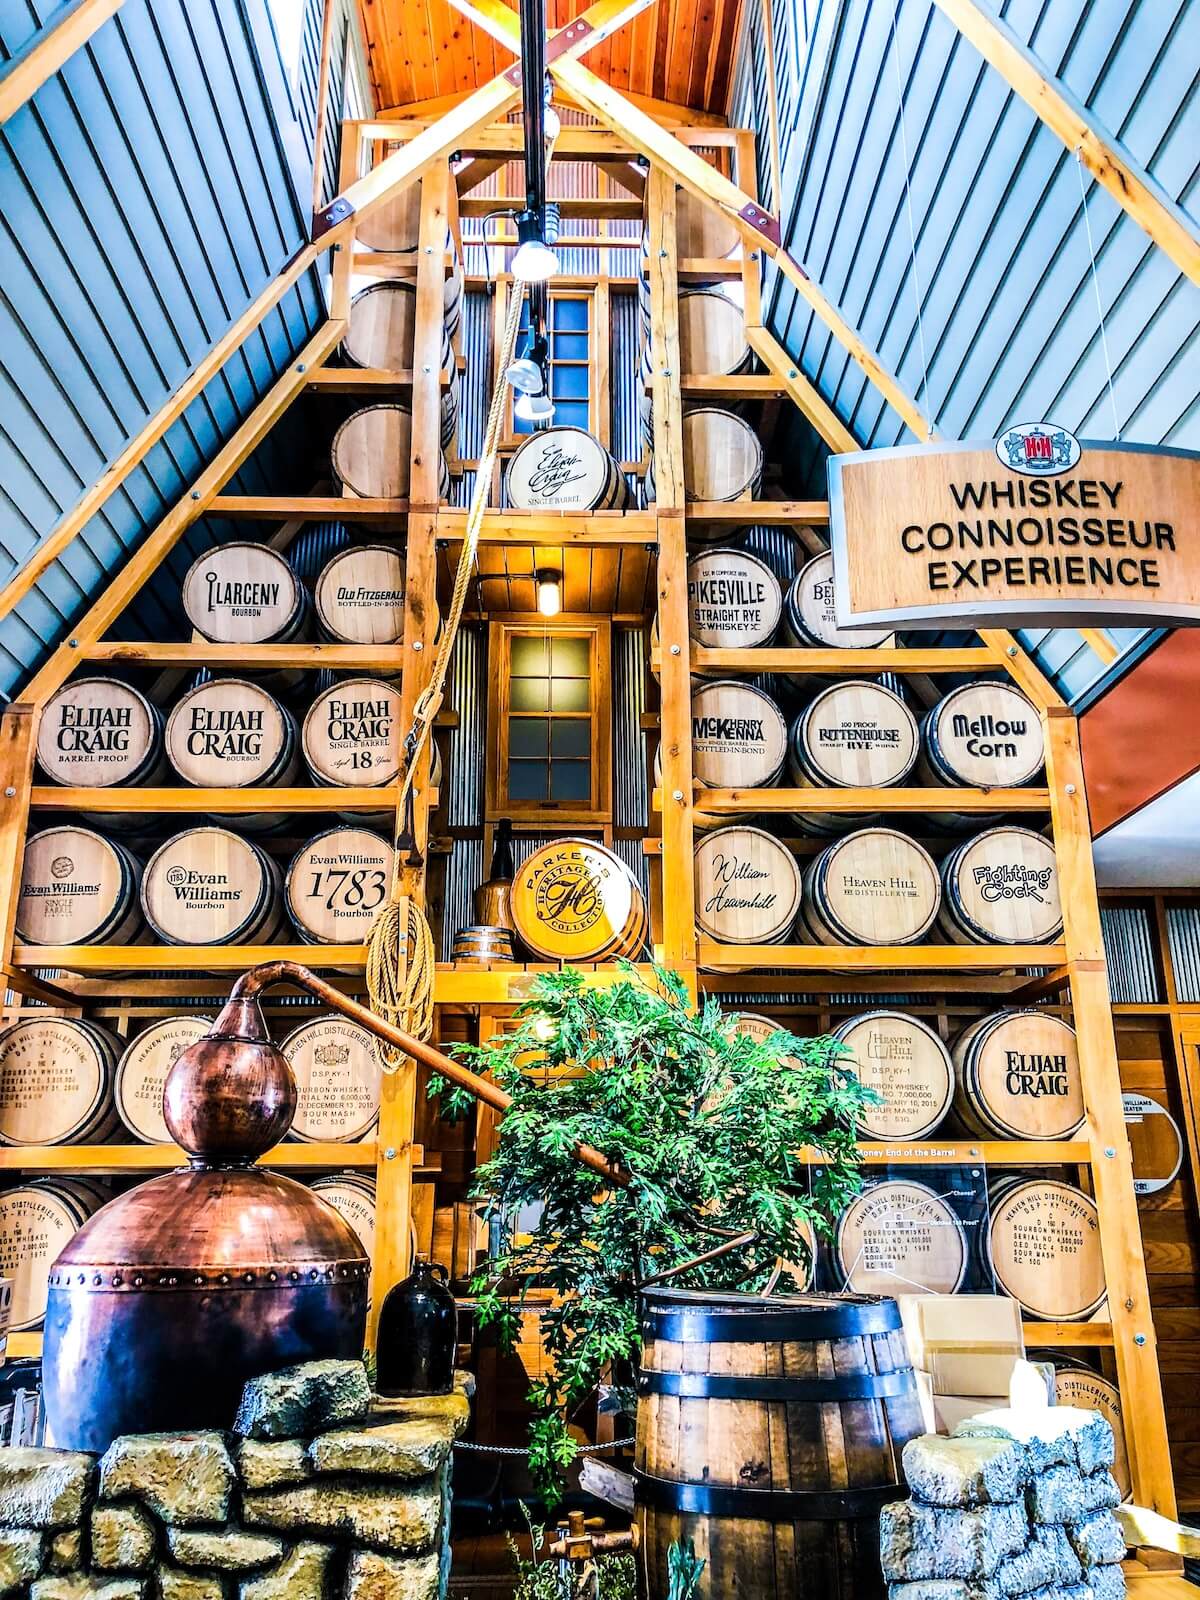 Wall of bourbon barrels on shelves at heaven hill distillery visitor center